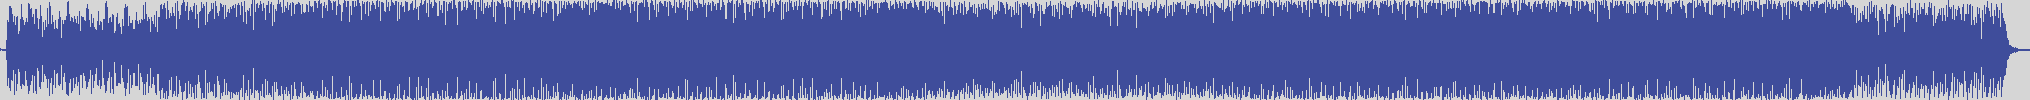 nf_boyz_records [NFY049] Bartosz Cunningham - Speed Love [Ronny Kamarro Mix] audio wave form